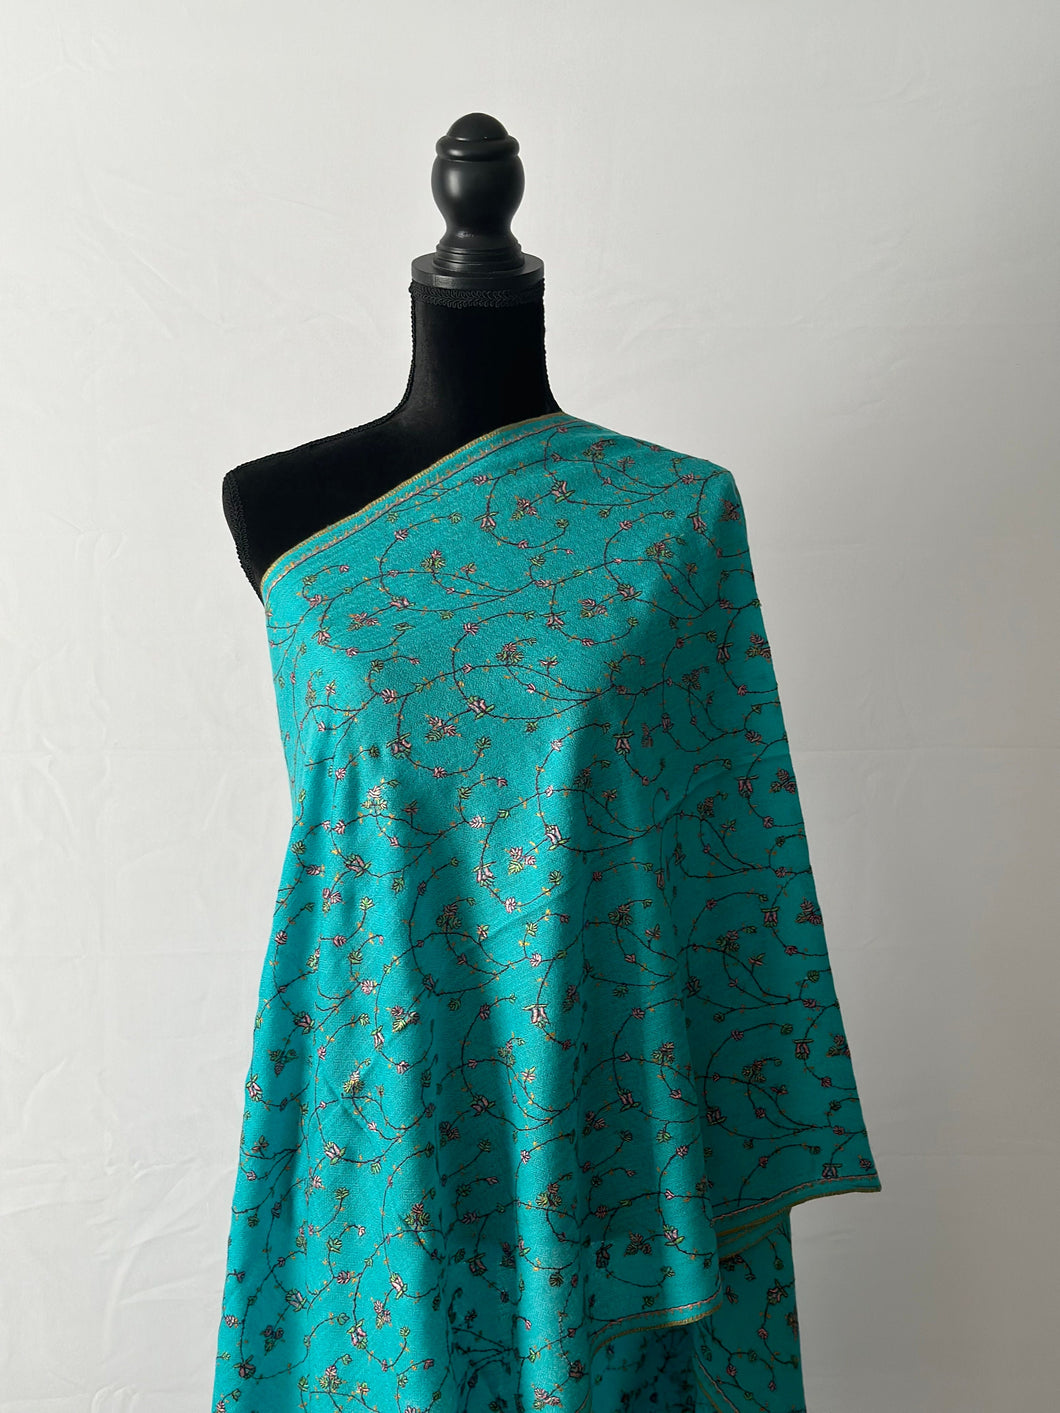 Sozni Embroidered Jali Pashmina  Stole (100% Fine Wool) - embroidered Kashmiri Shawl, all over embroidery